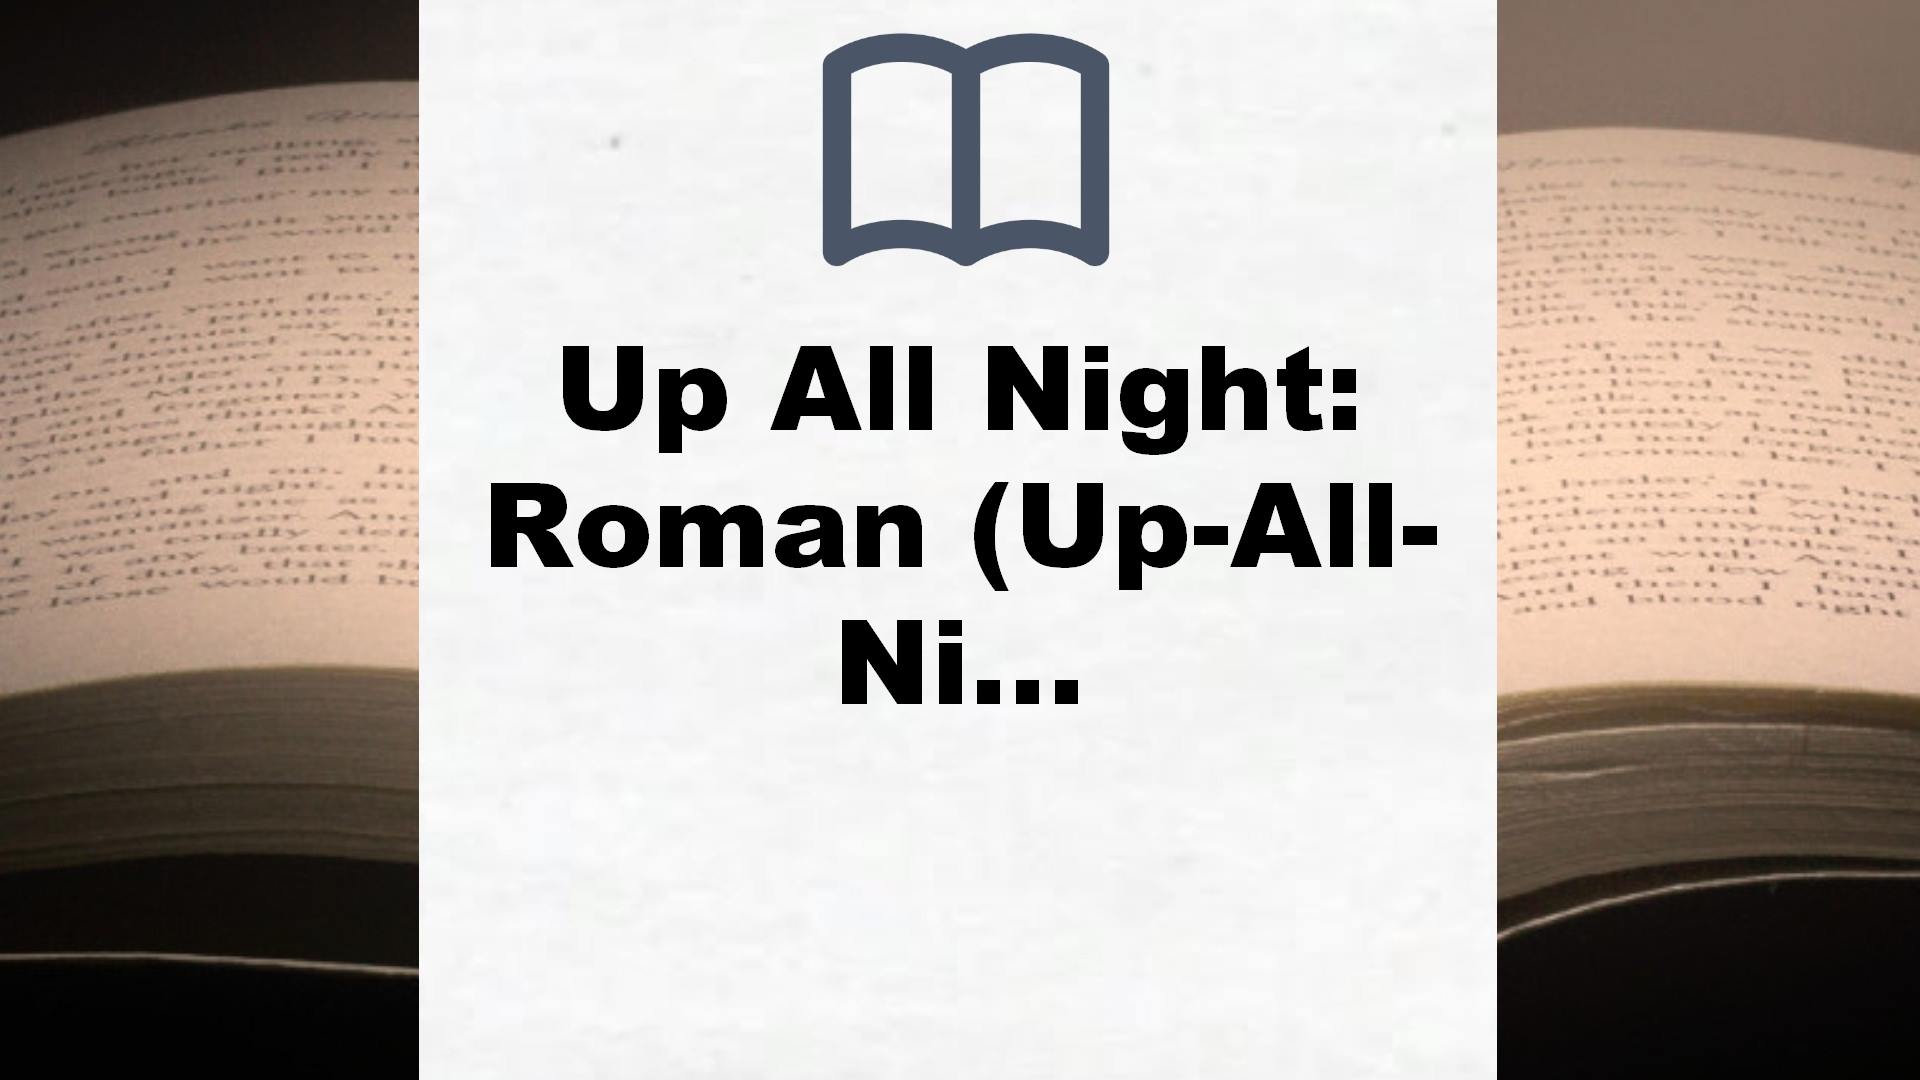 Up All Night: Roman (Up-All-Night-Reihe, Band 1) – Buchrezension